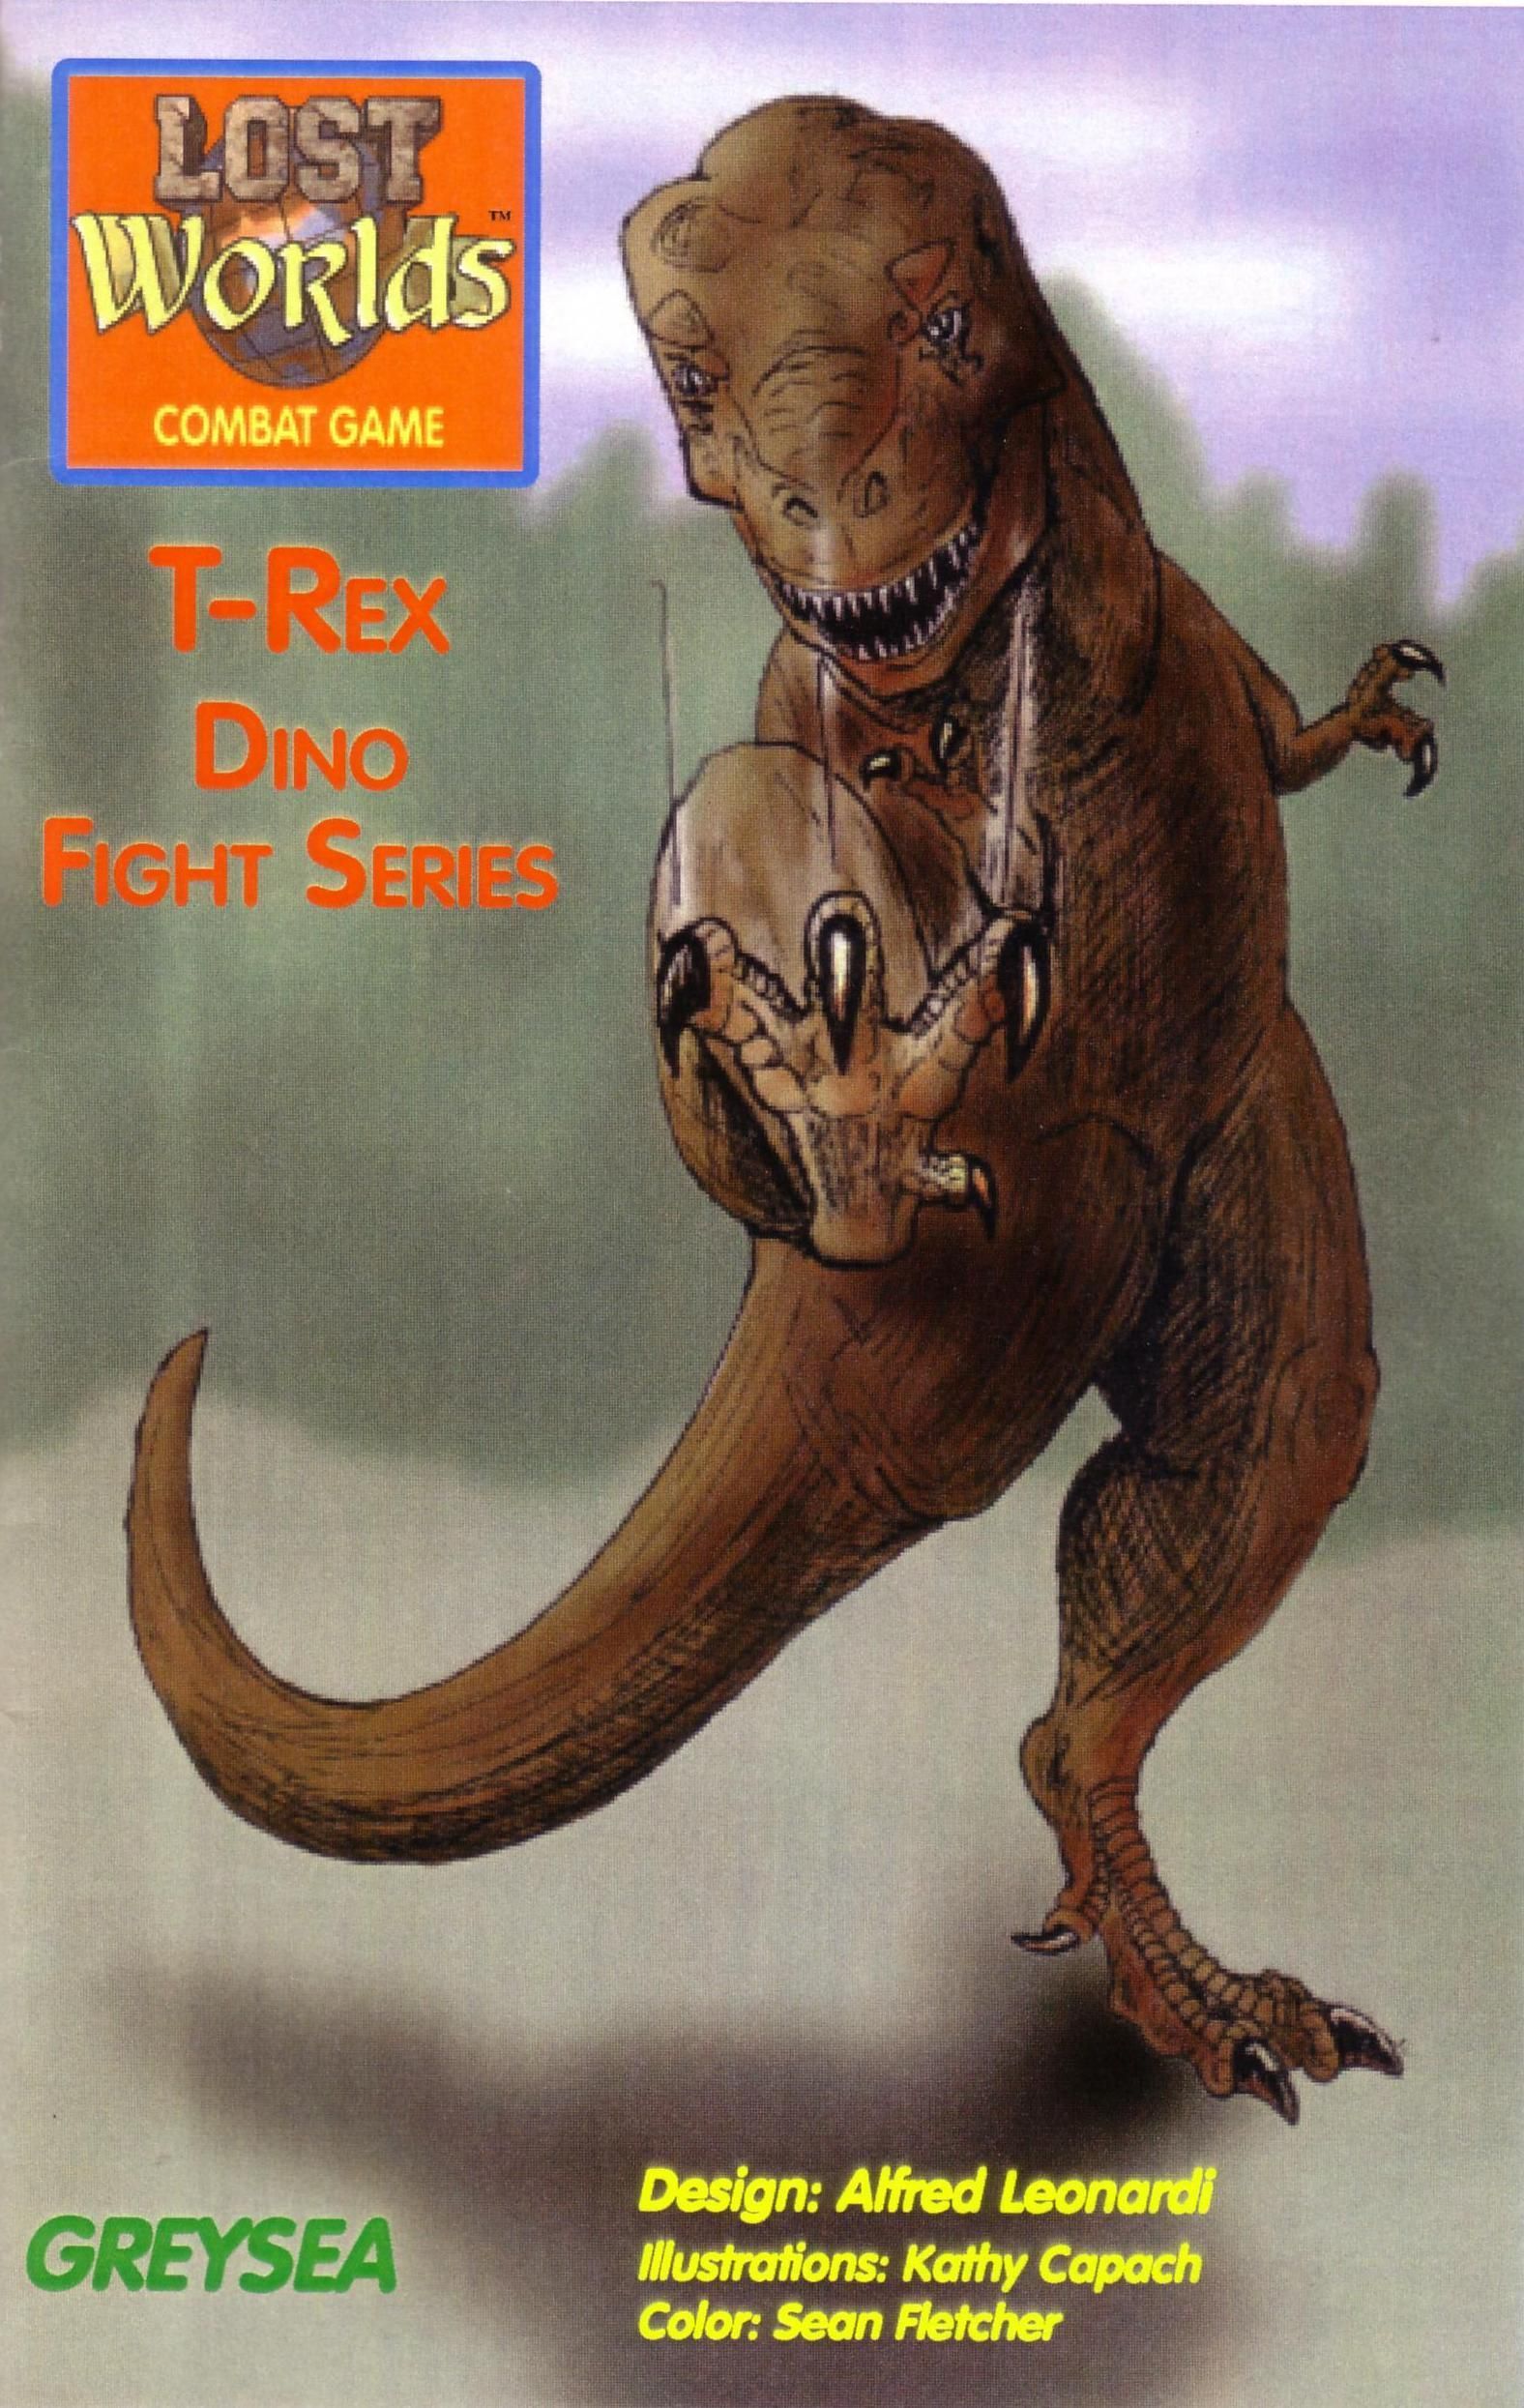 Lost Worlds: Dino Fight Series – T-Rex